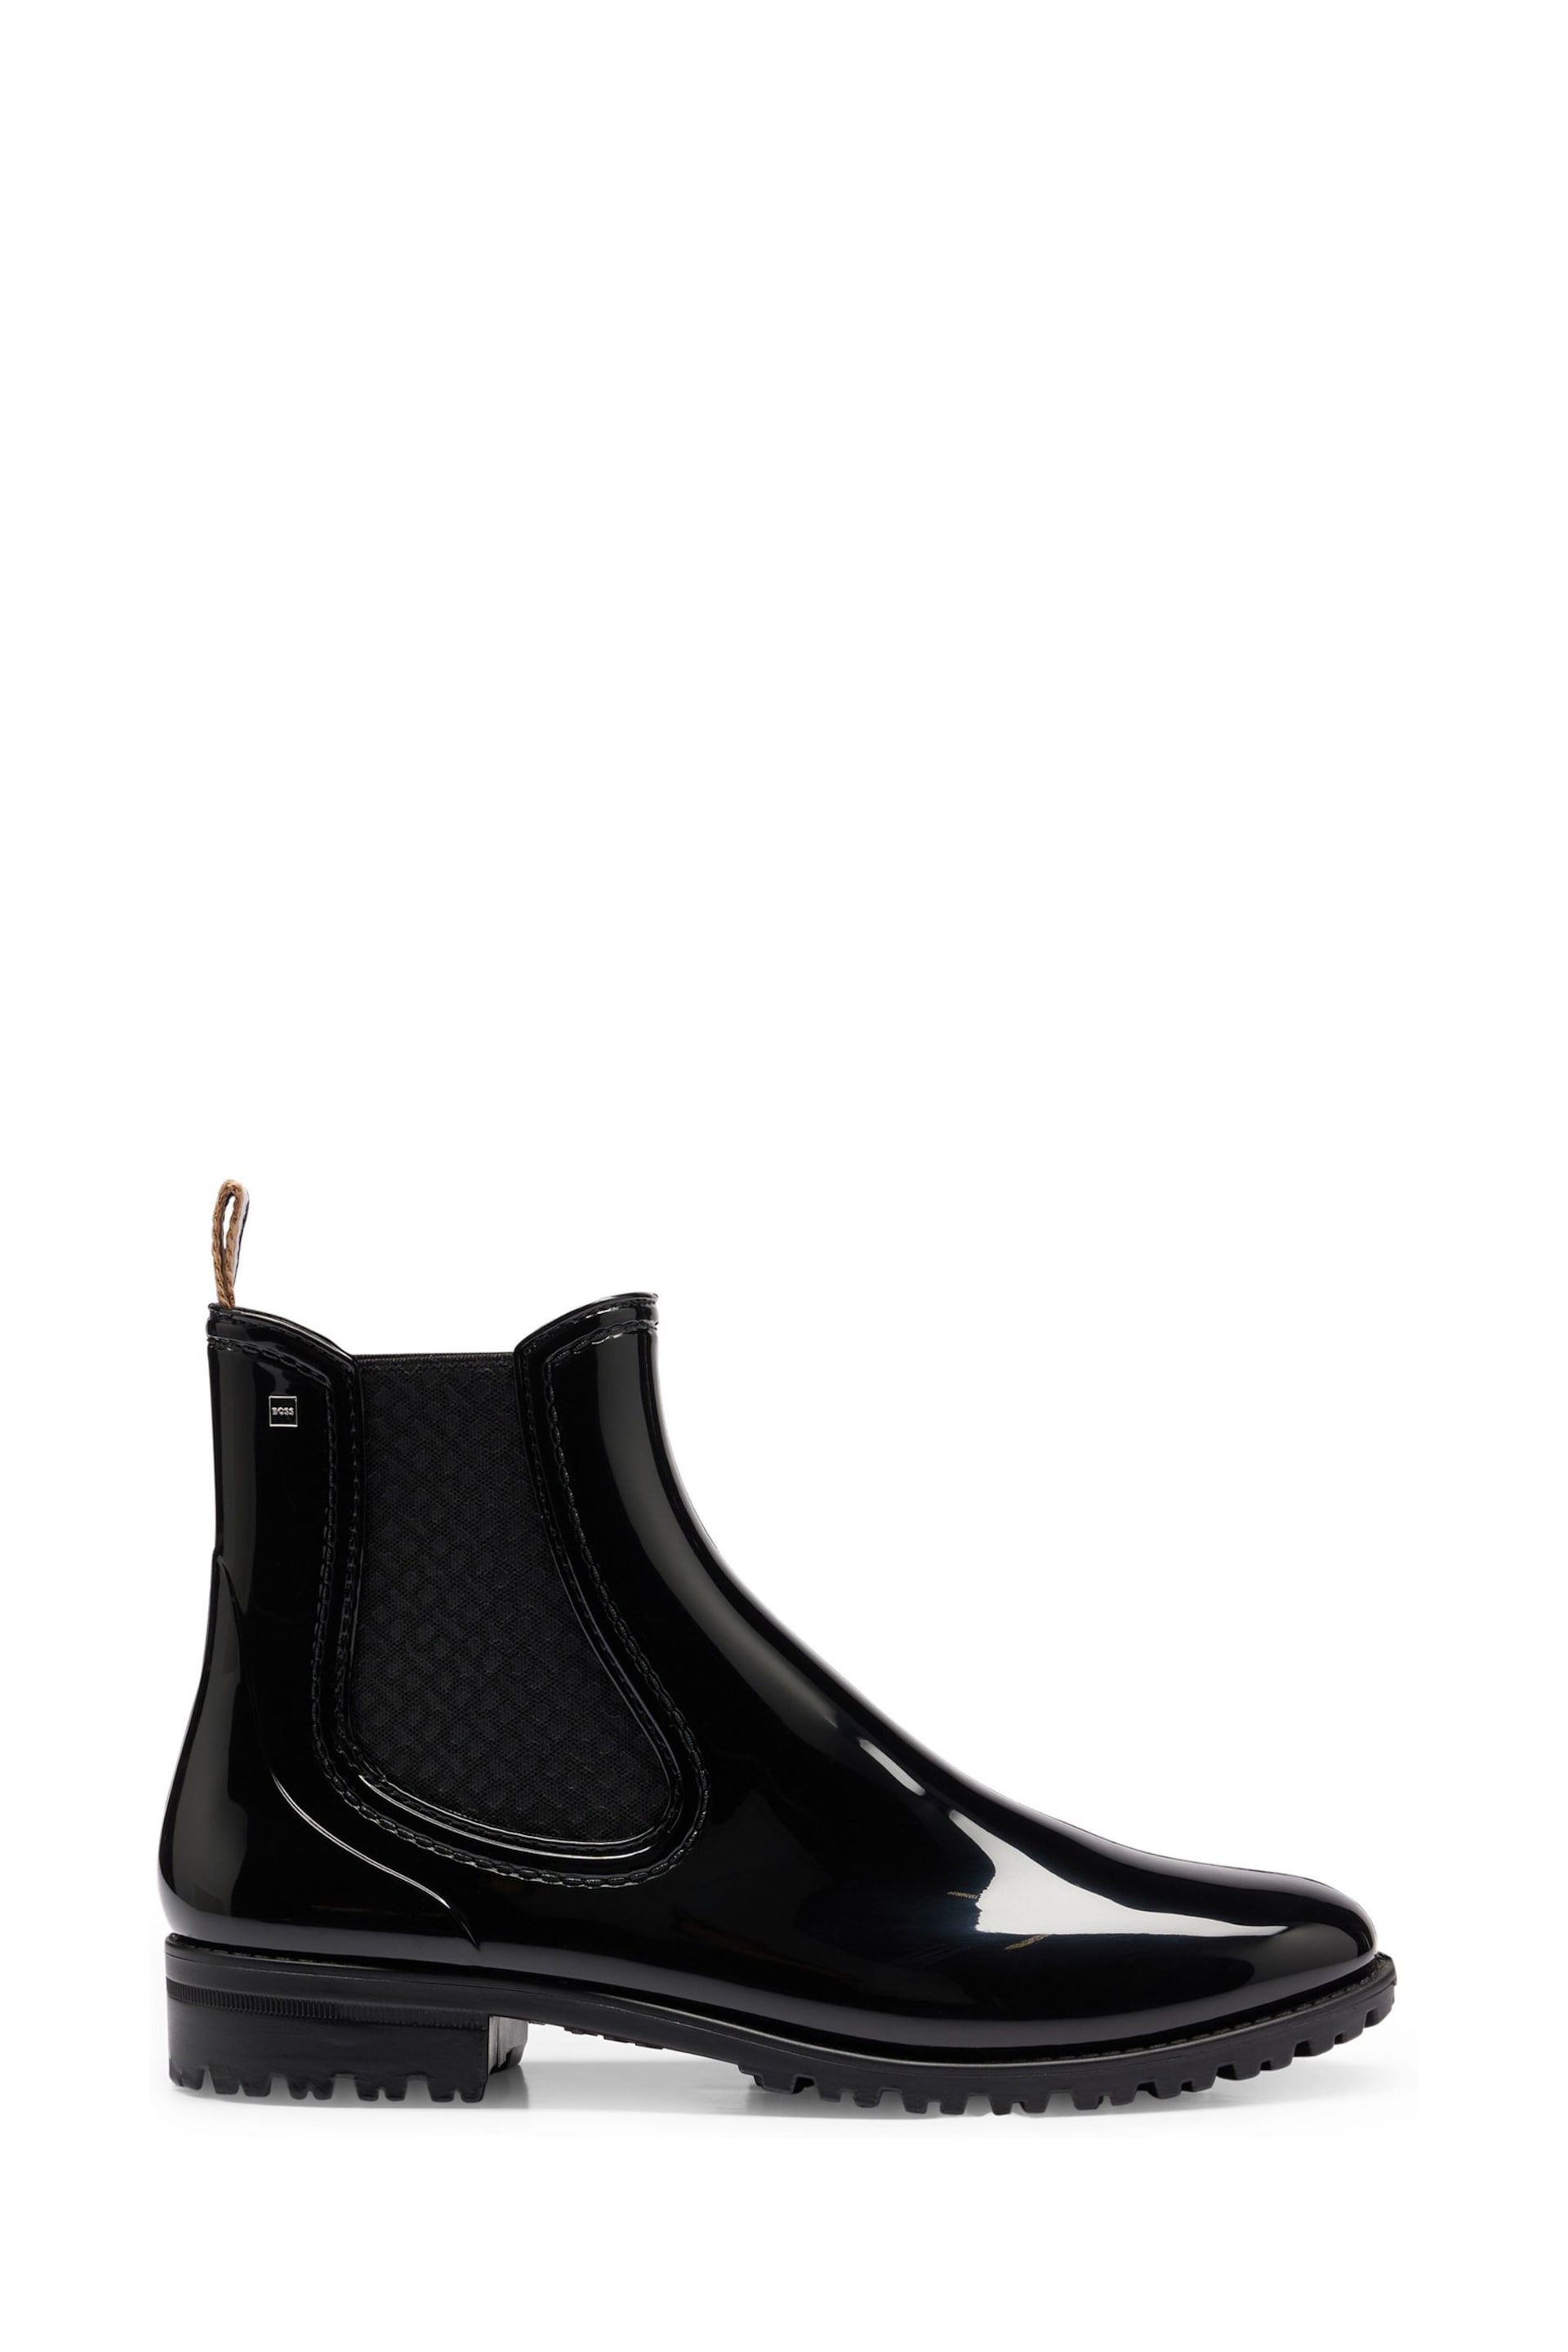 BOSS Black Chelsea Short Wellington Boots - Image 1 of 4